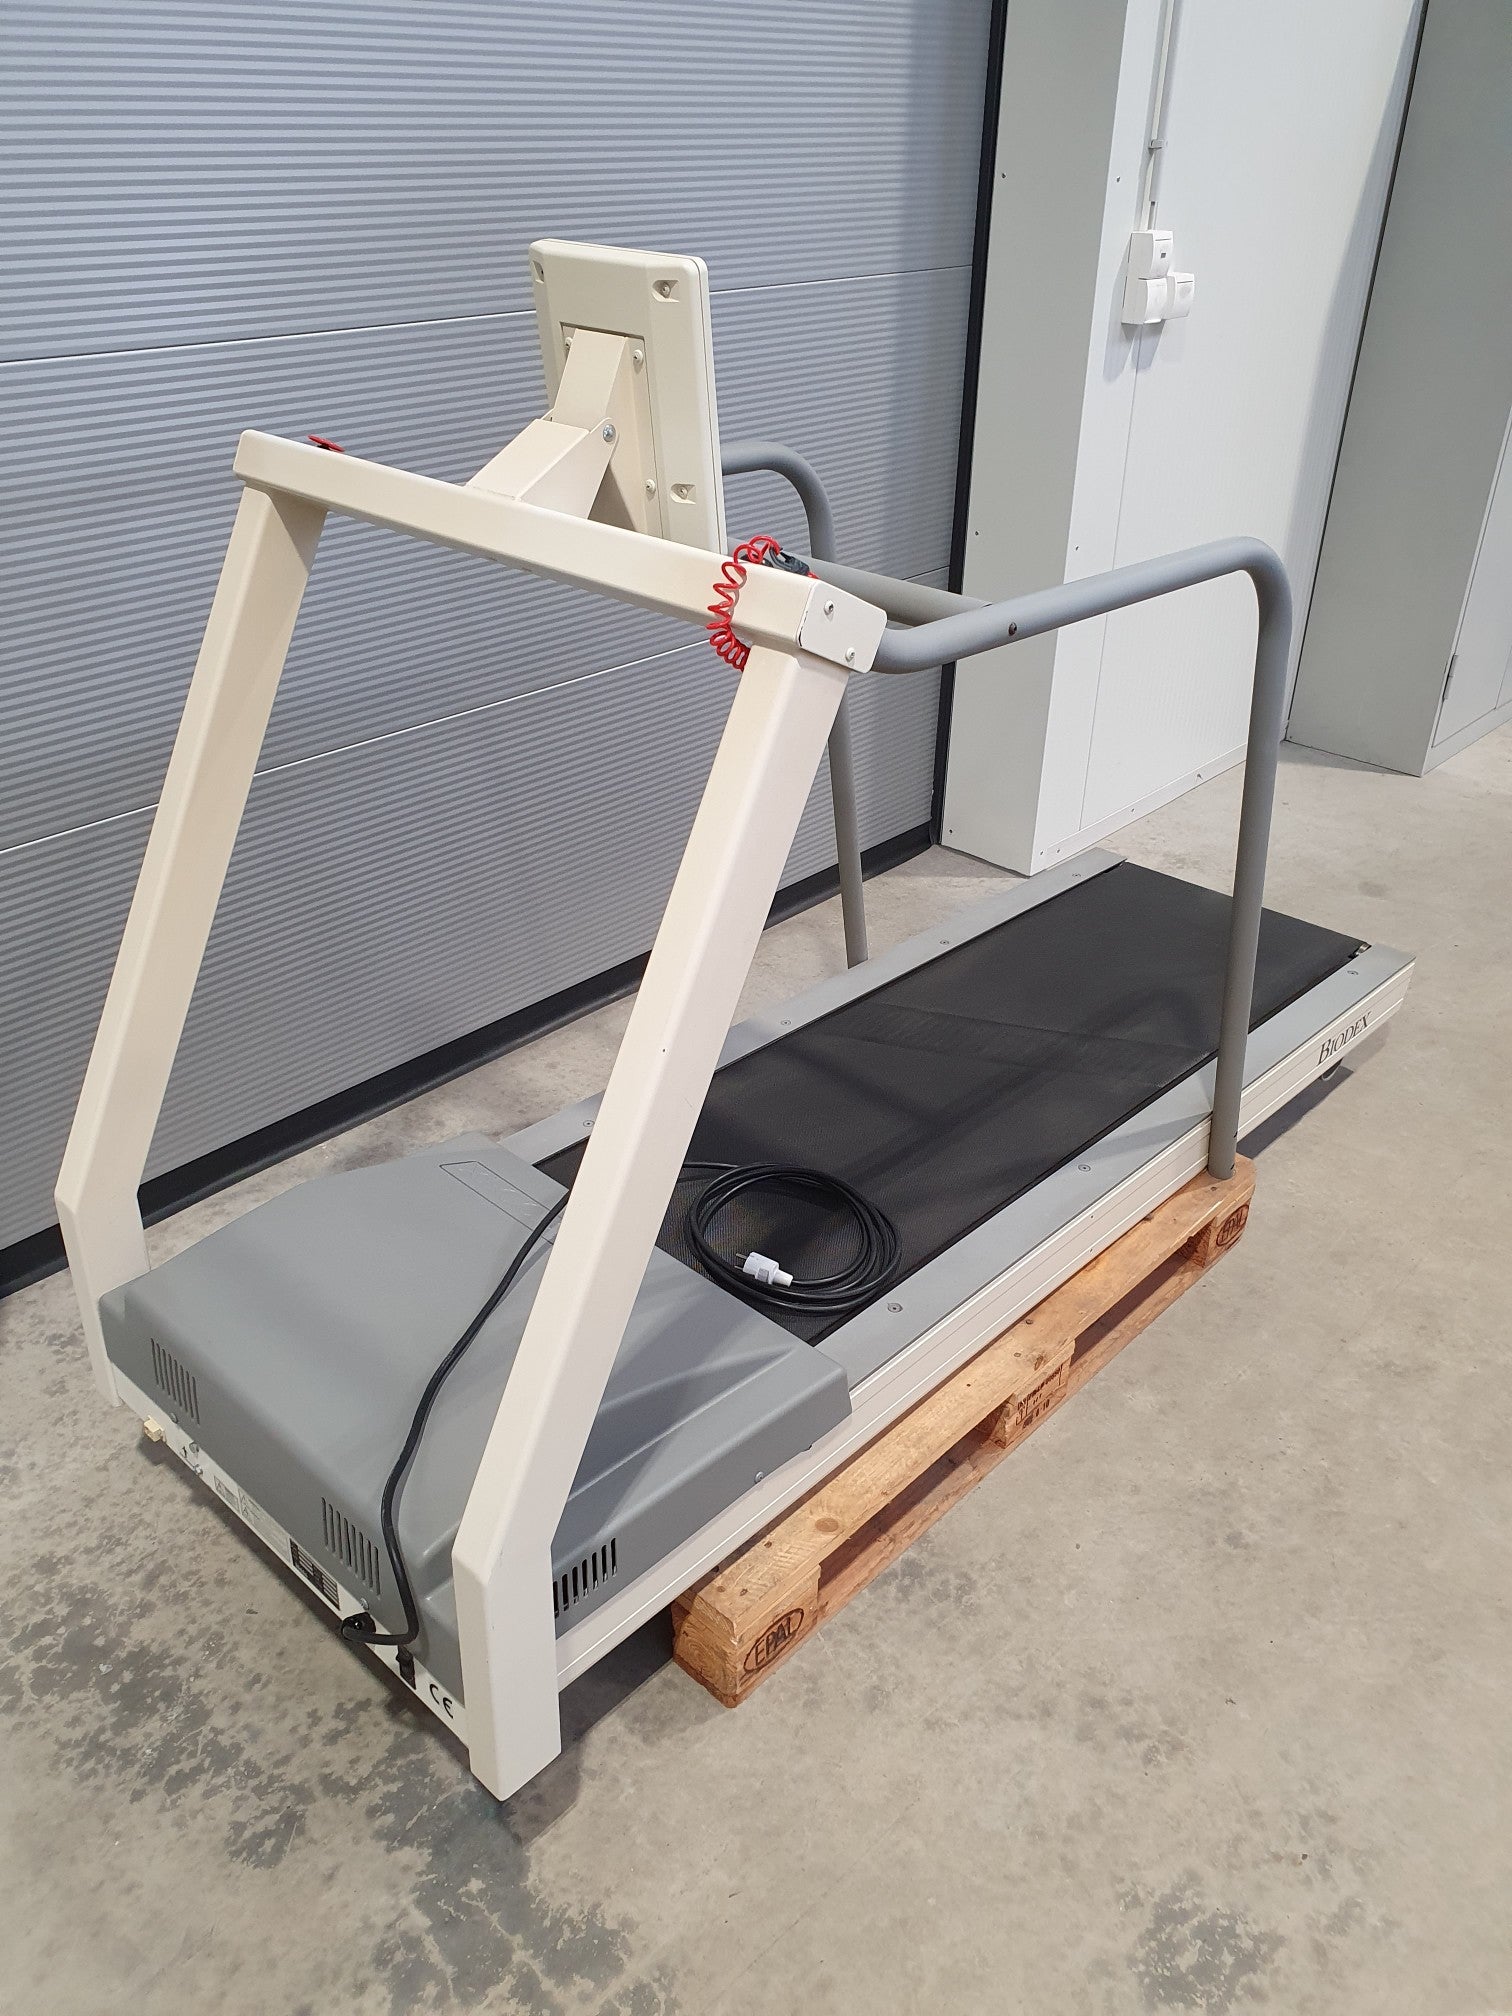 BIODEX RTM400 Medizinisches Laufband Treadmill Fitness Studio Physio Therapie Fitness-Inserate.de